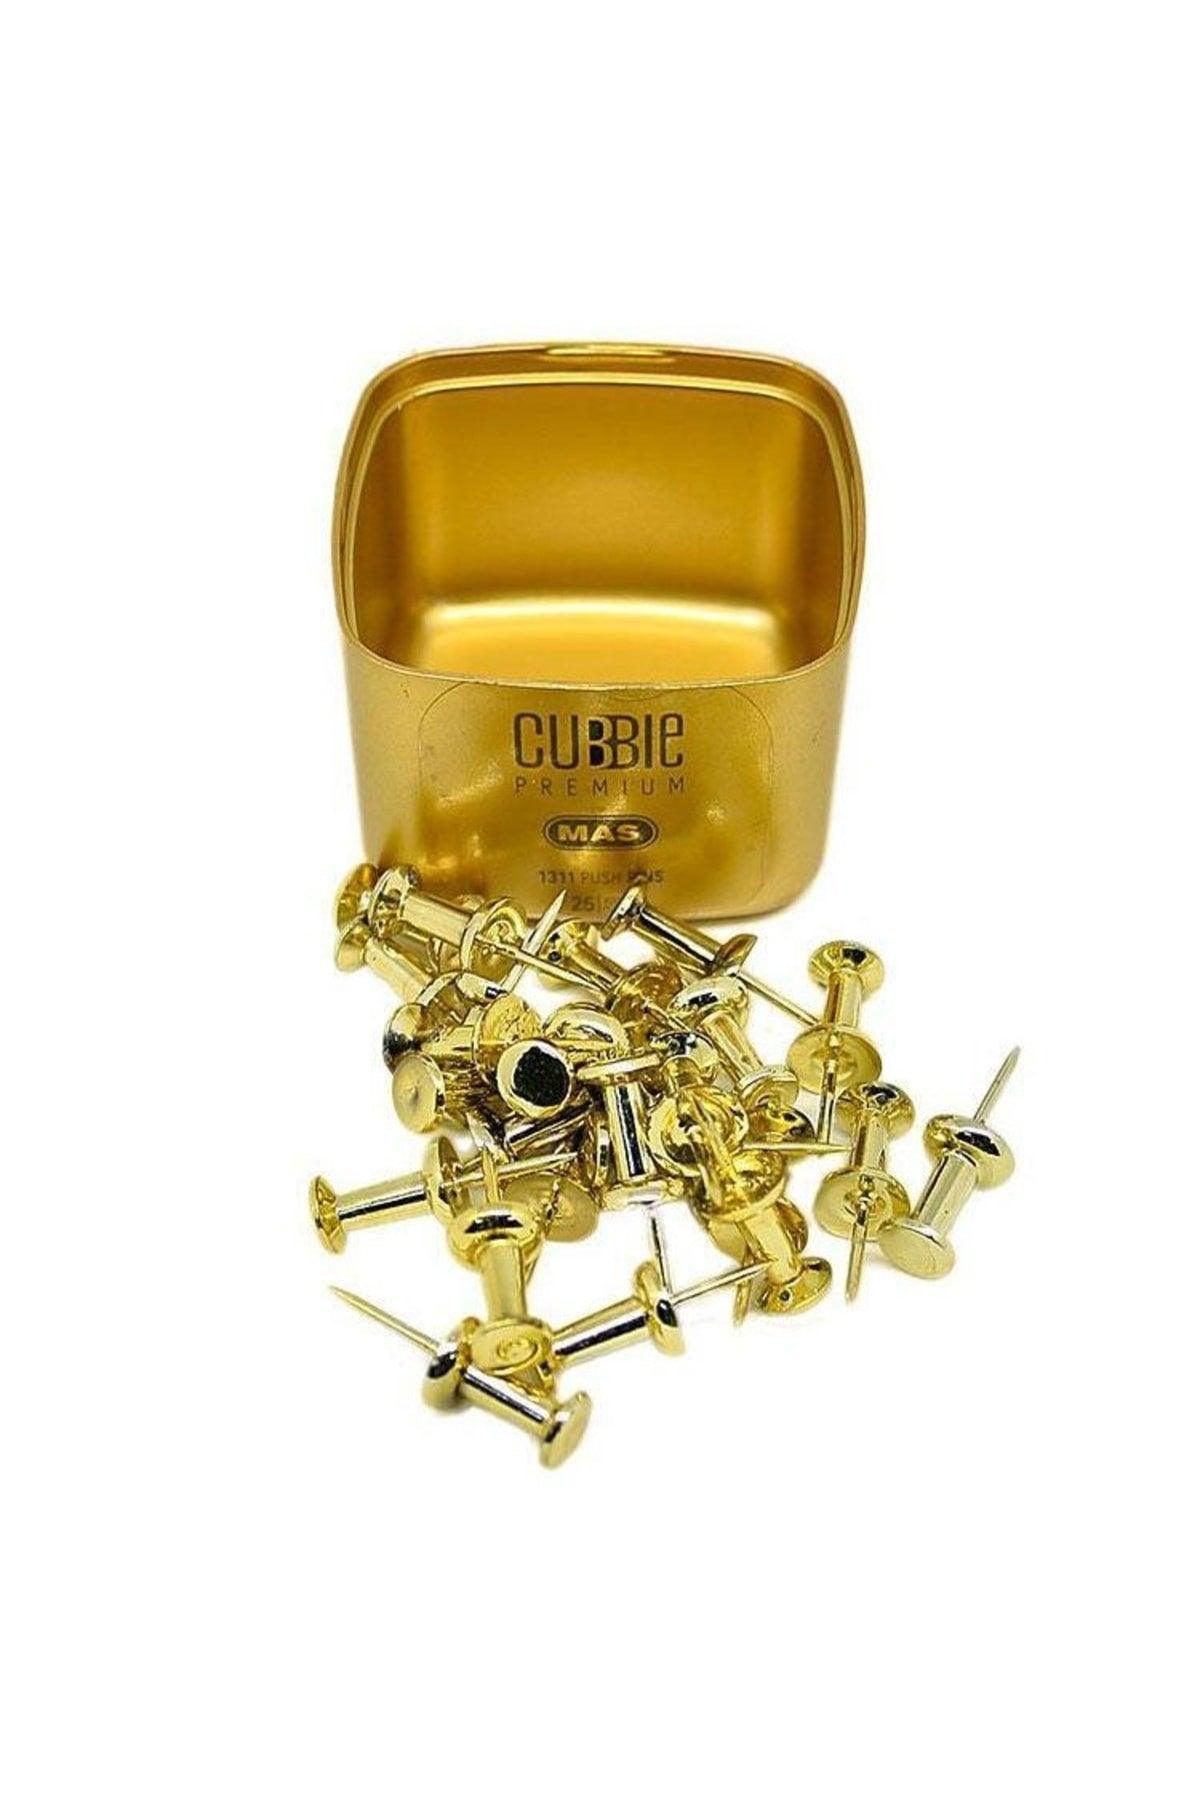 Cubbie Premium Gold Standard Map Nail